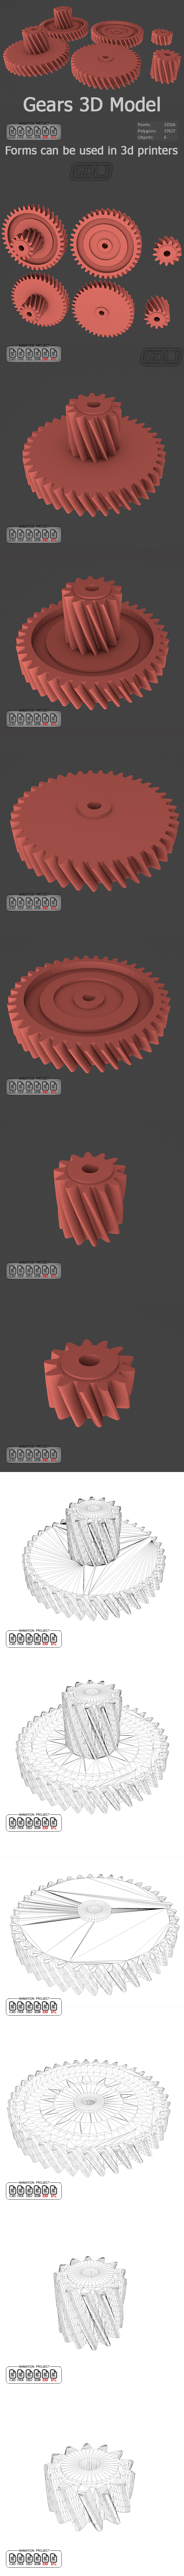 Gears 3D Models - 3Docean 21606870